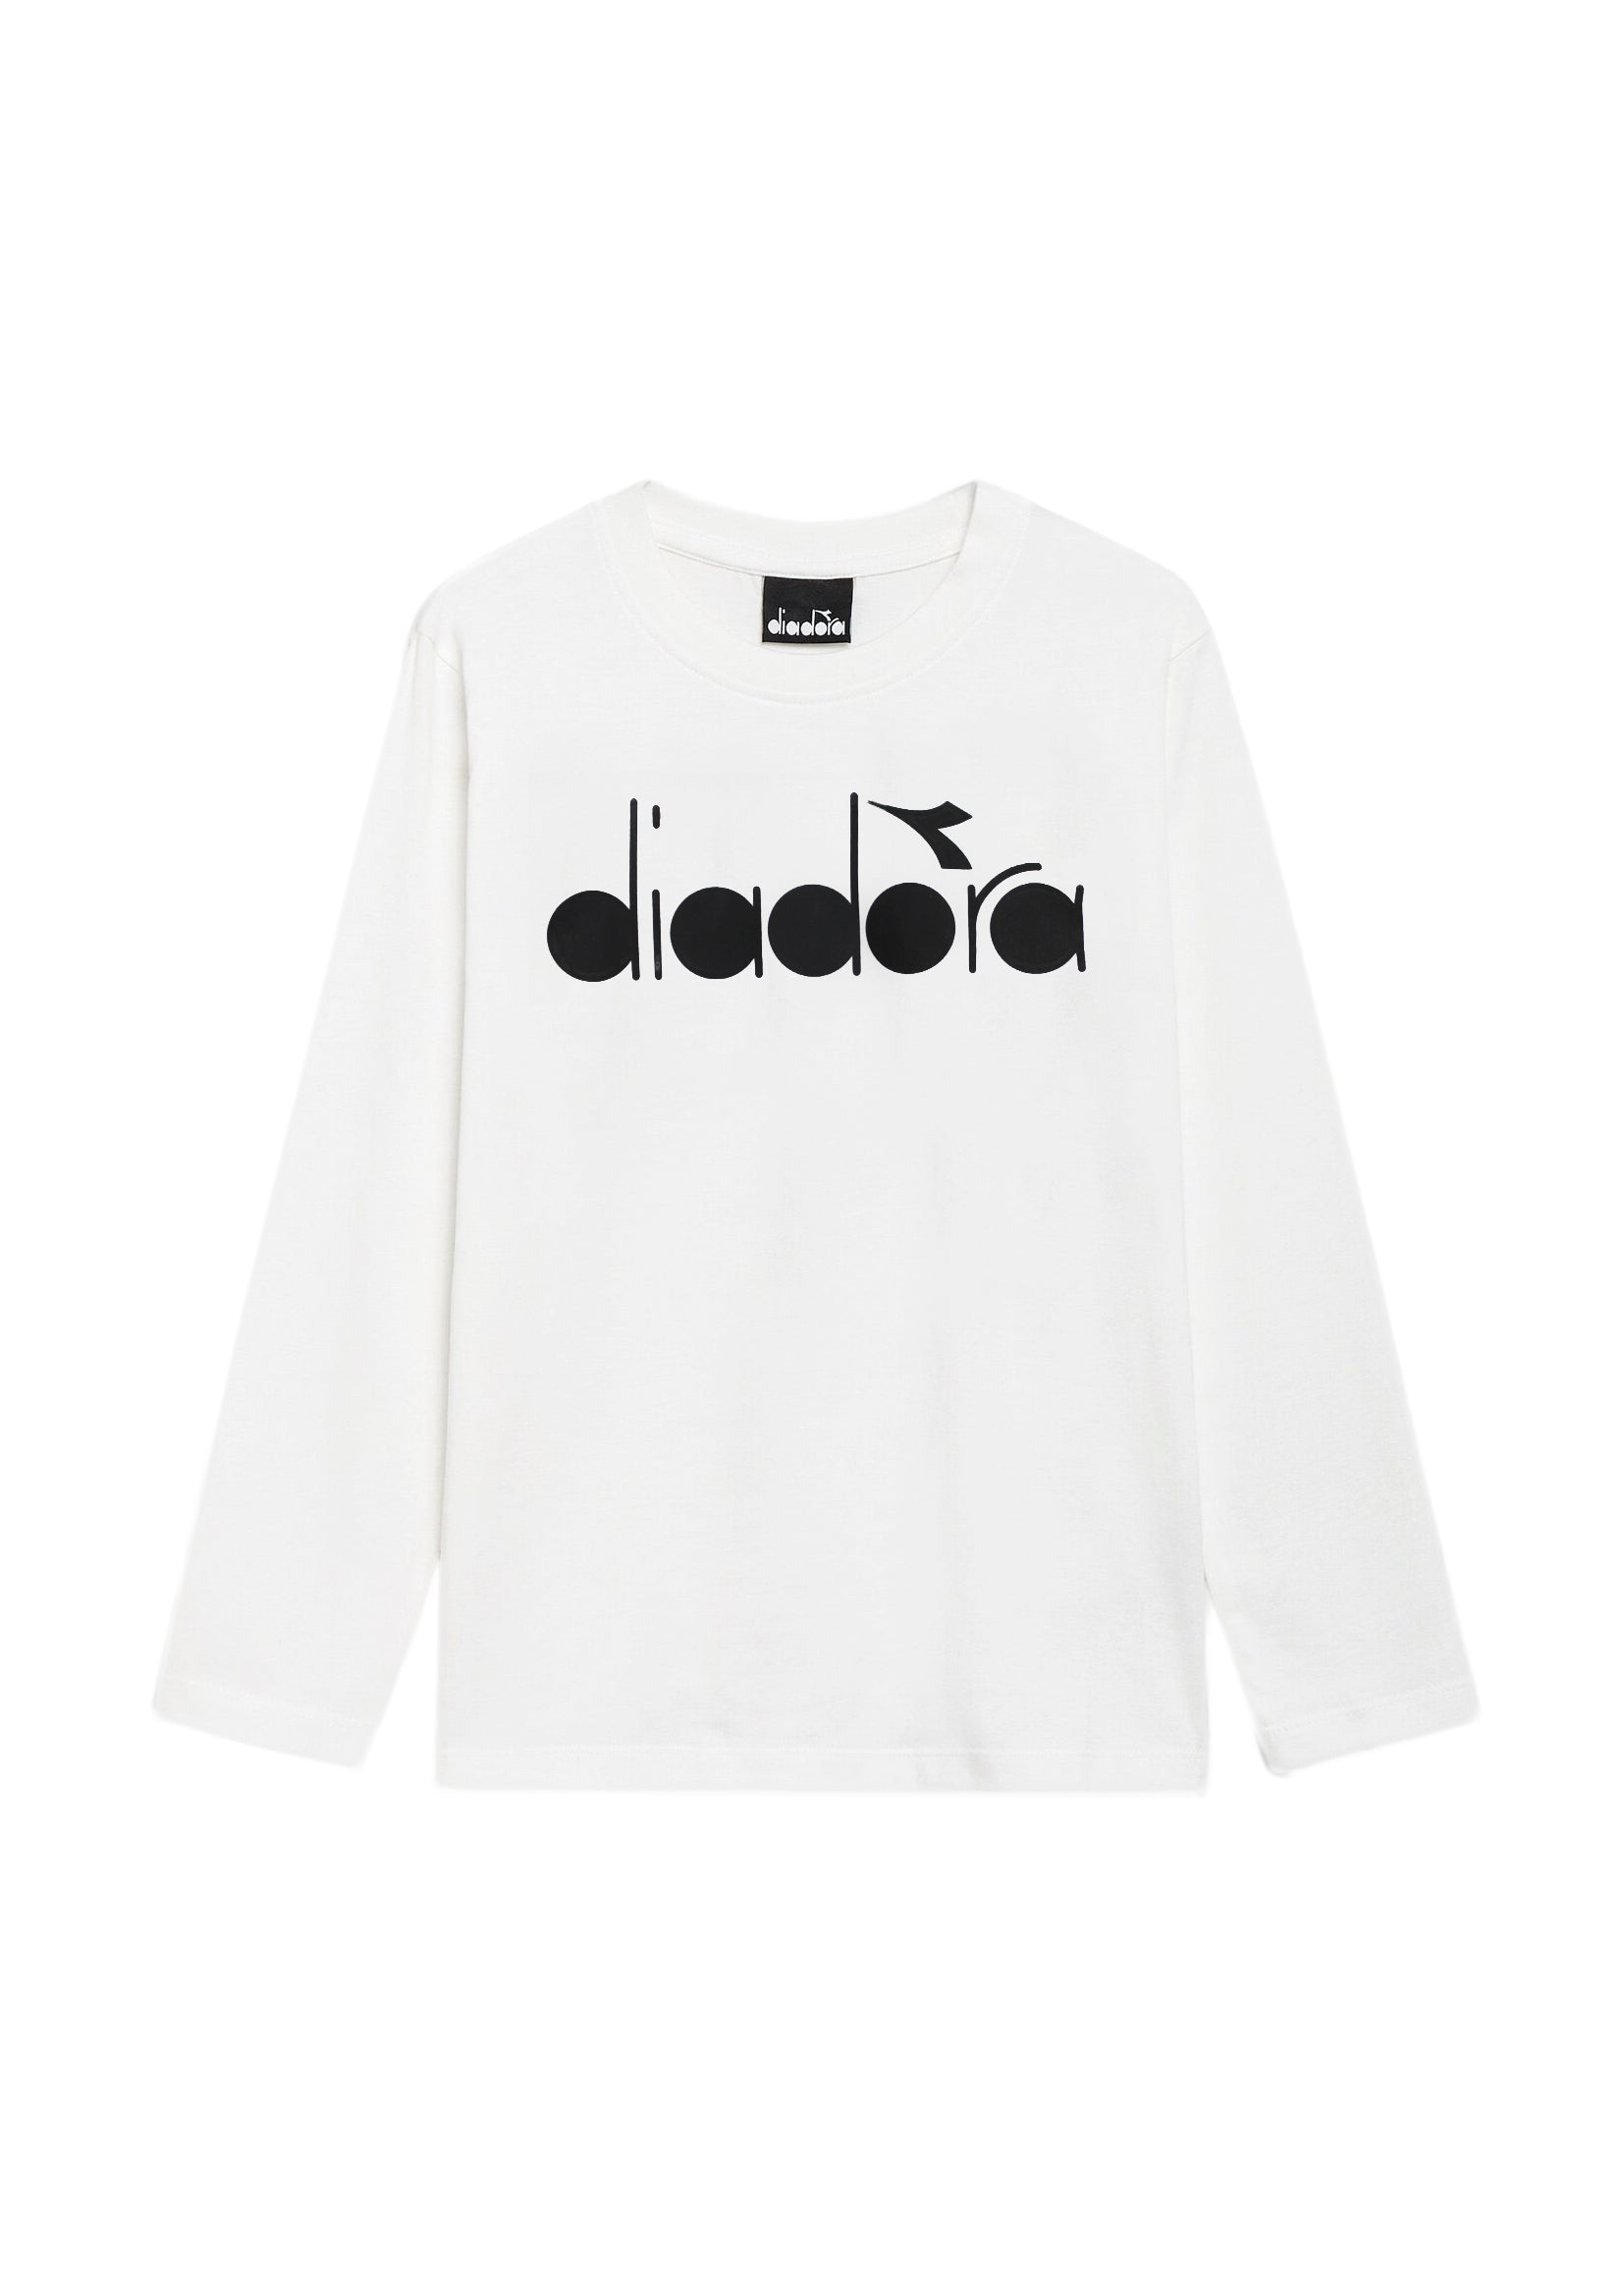 Diadora Kids T-Shirt: Maniche Lunghe Panna con Logo - Stile Sportivo per Bambini